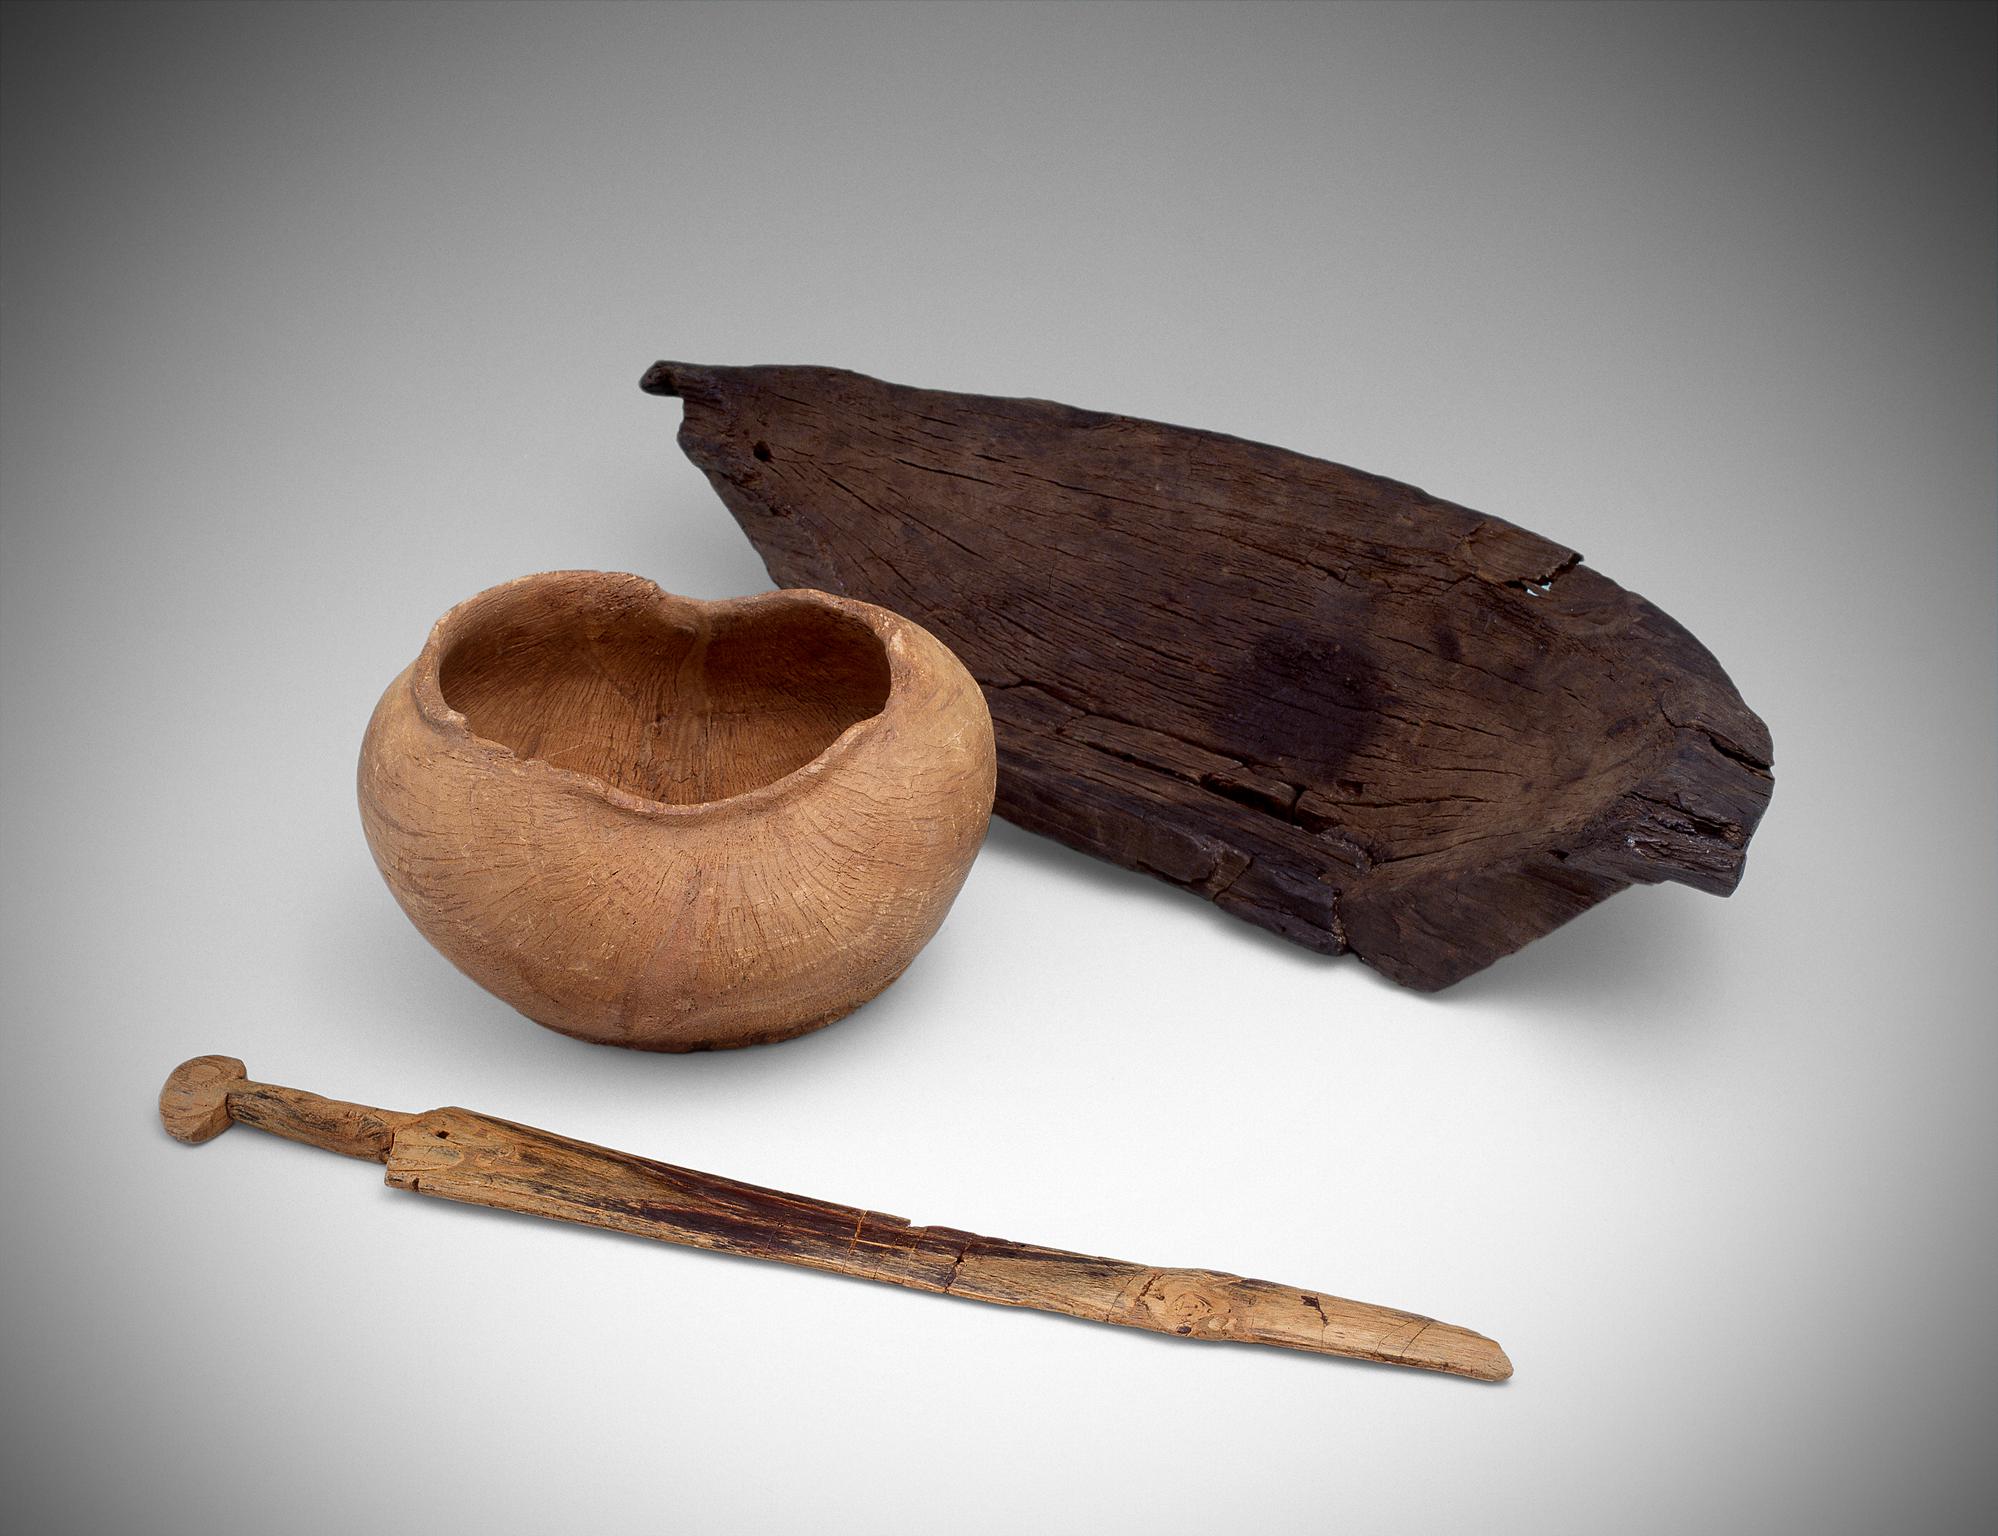 Iron Age wooden bowl